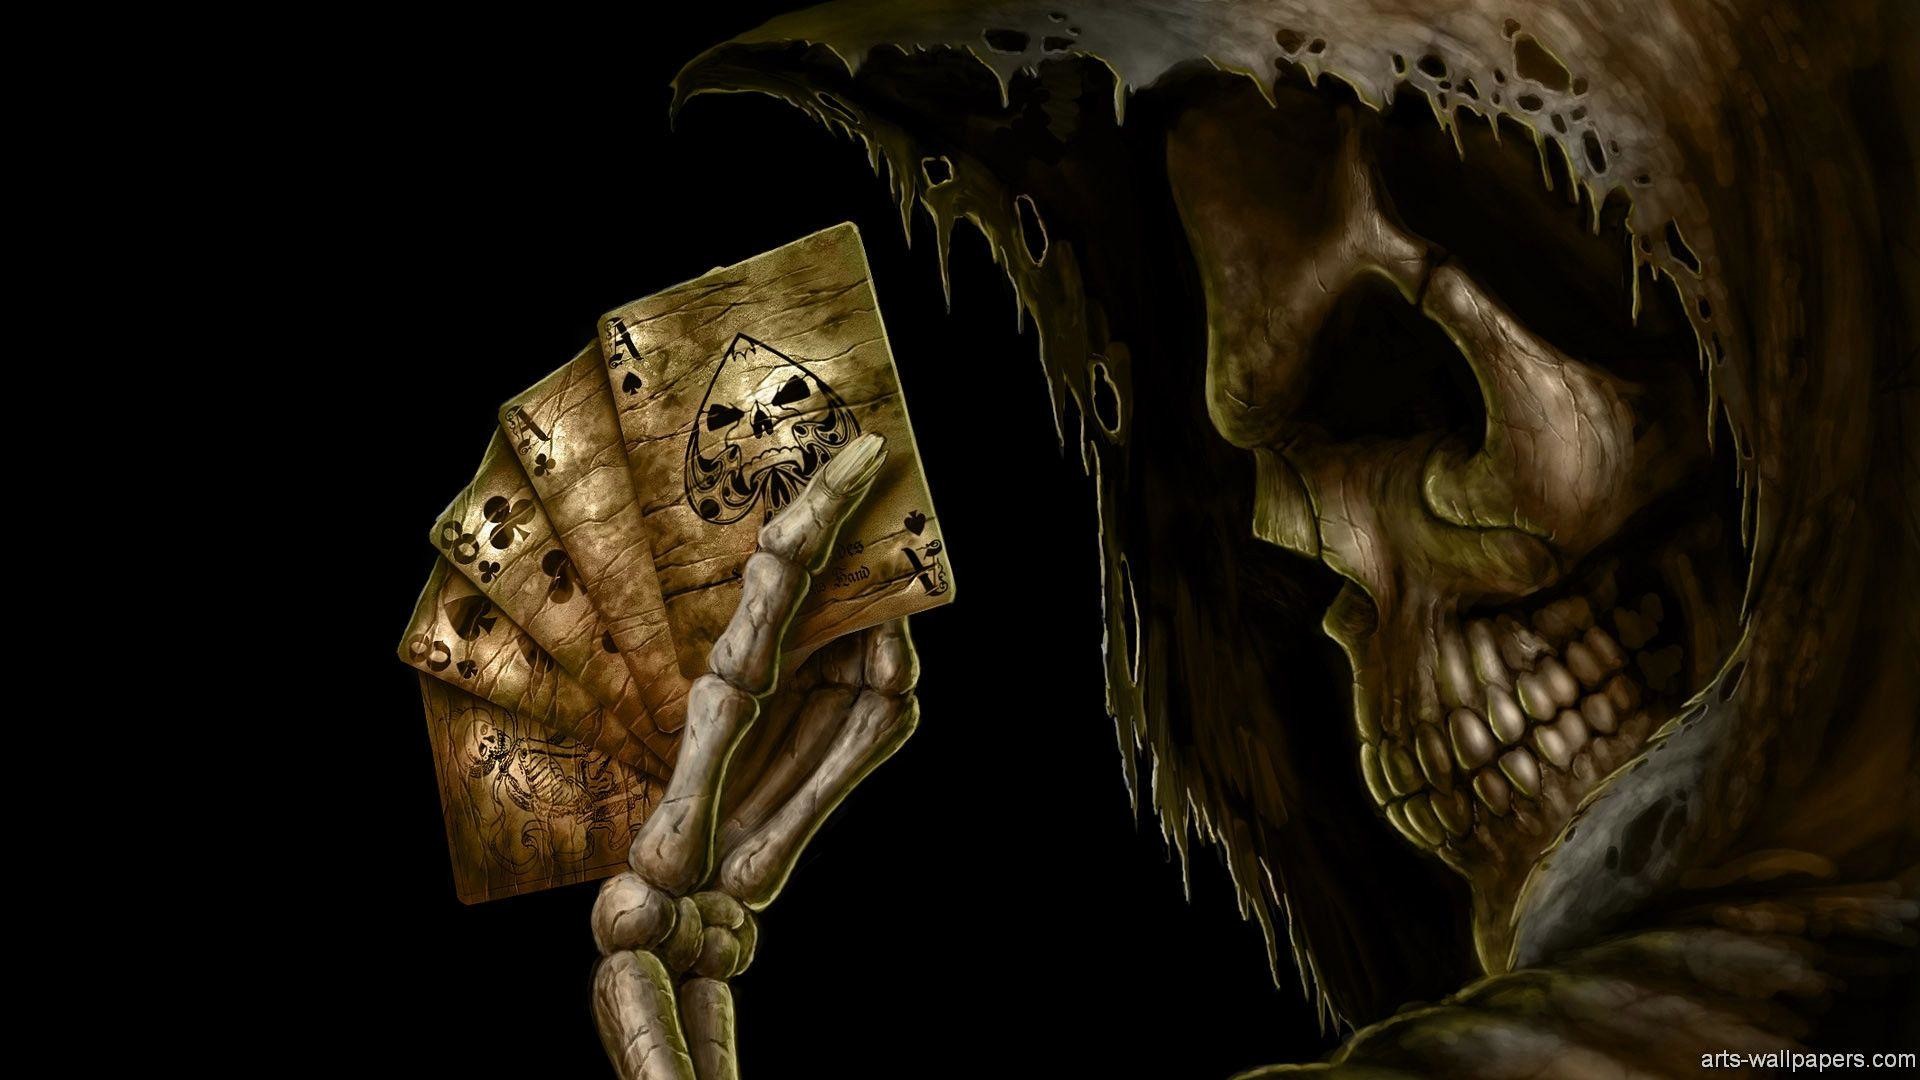 totenkopf wallpaper,demon,fictional character,skull,cg artwork,darkness